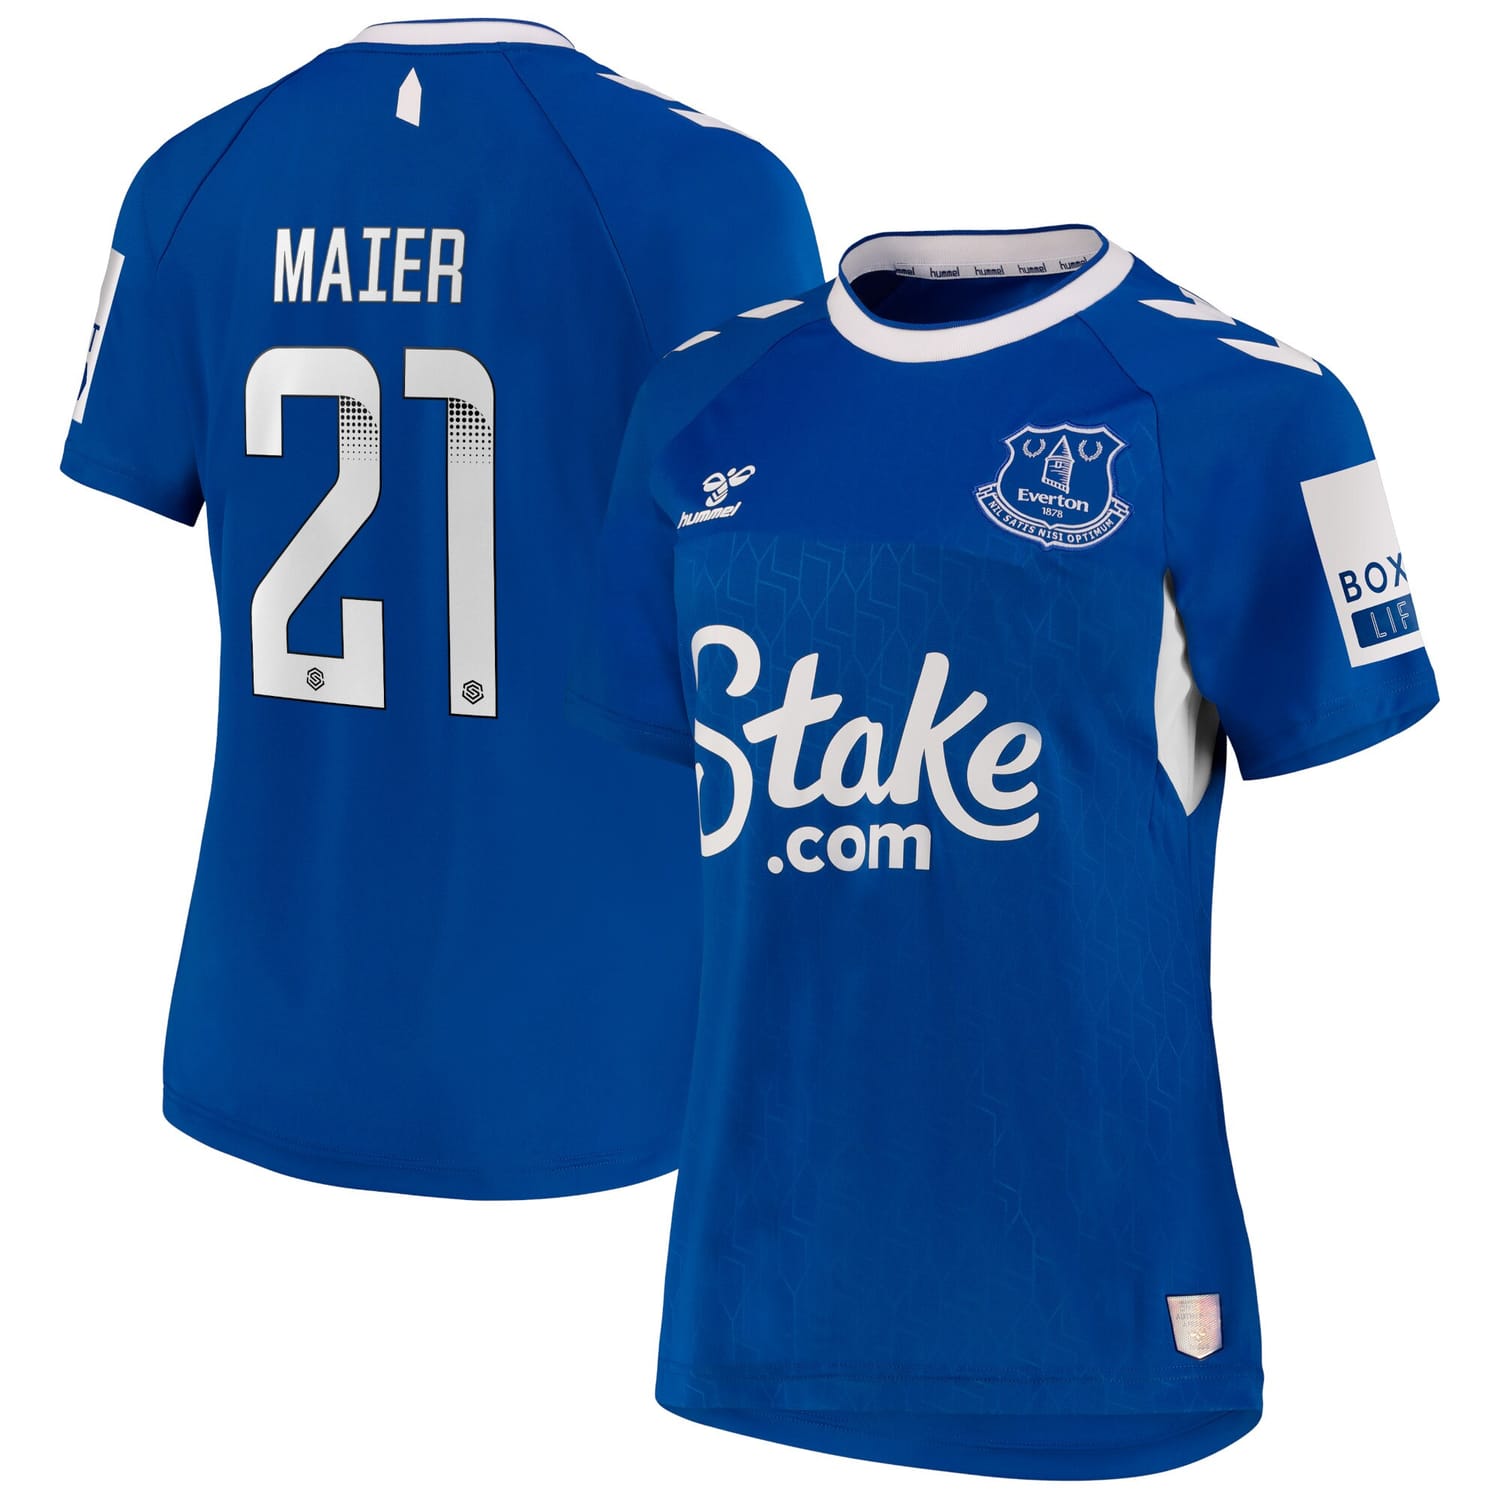 Premier League Everton Home WSL Jersey Shirt 2022-23 player Leonie Maier 21 printing for Women